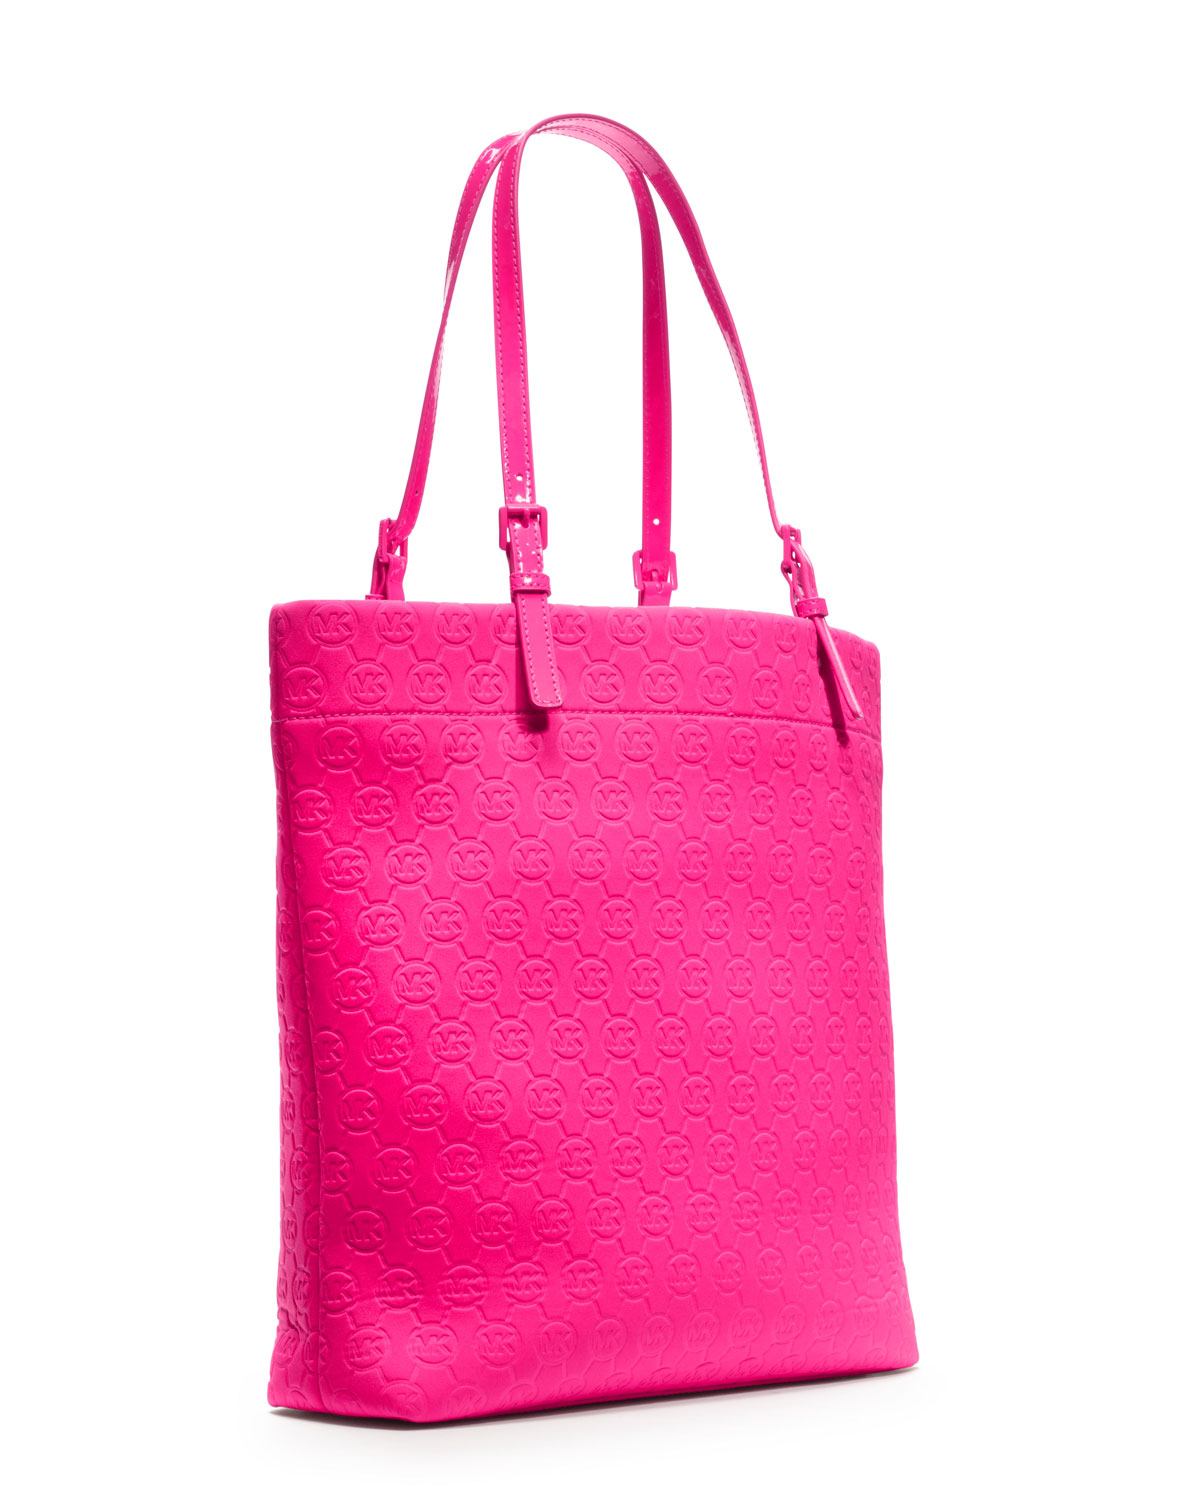 neon pink MK bag